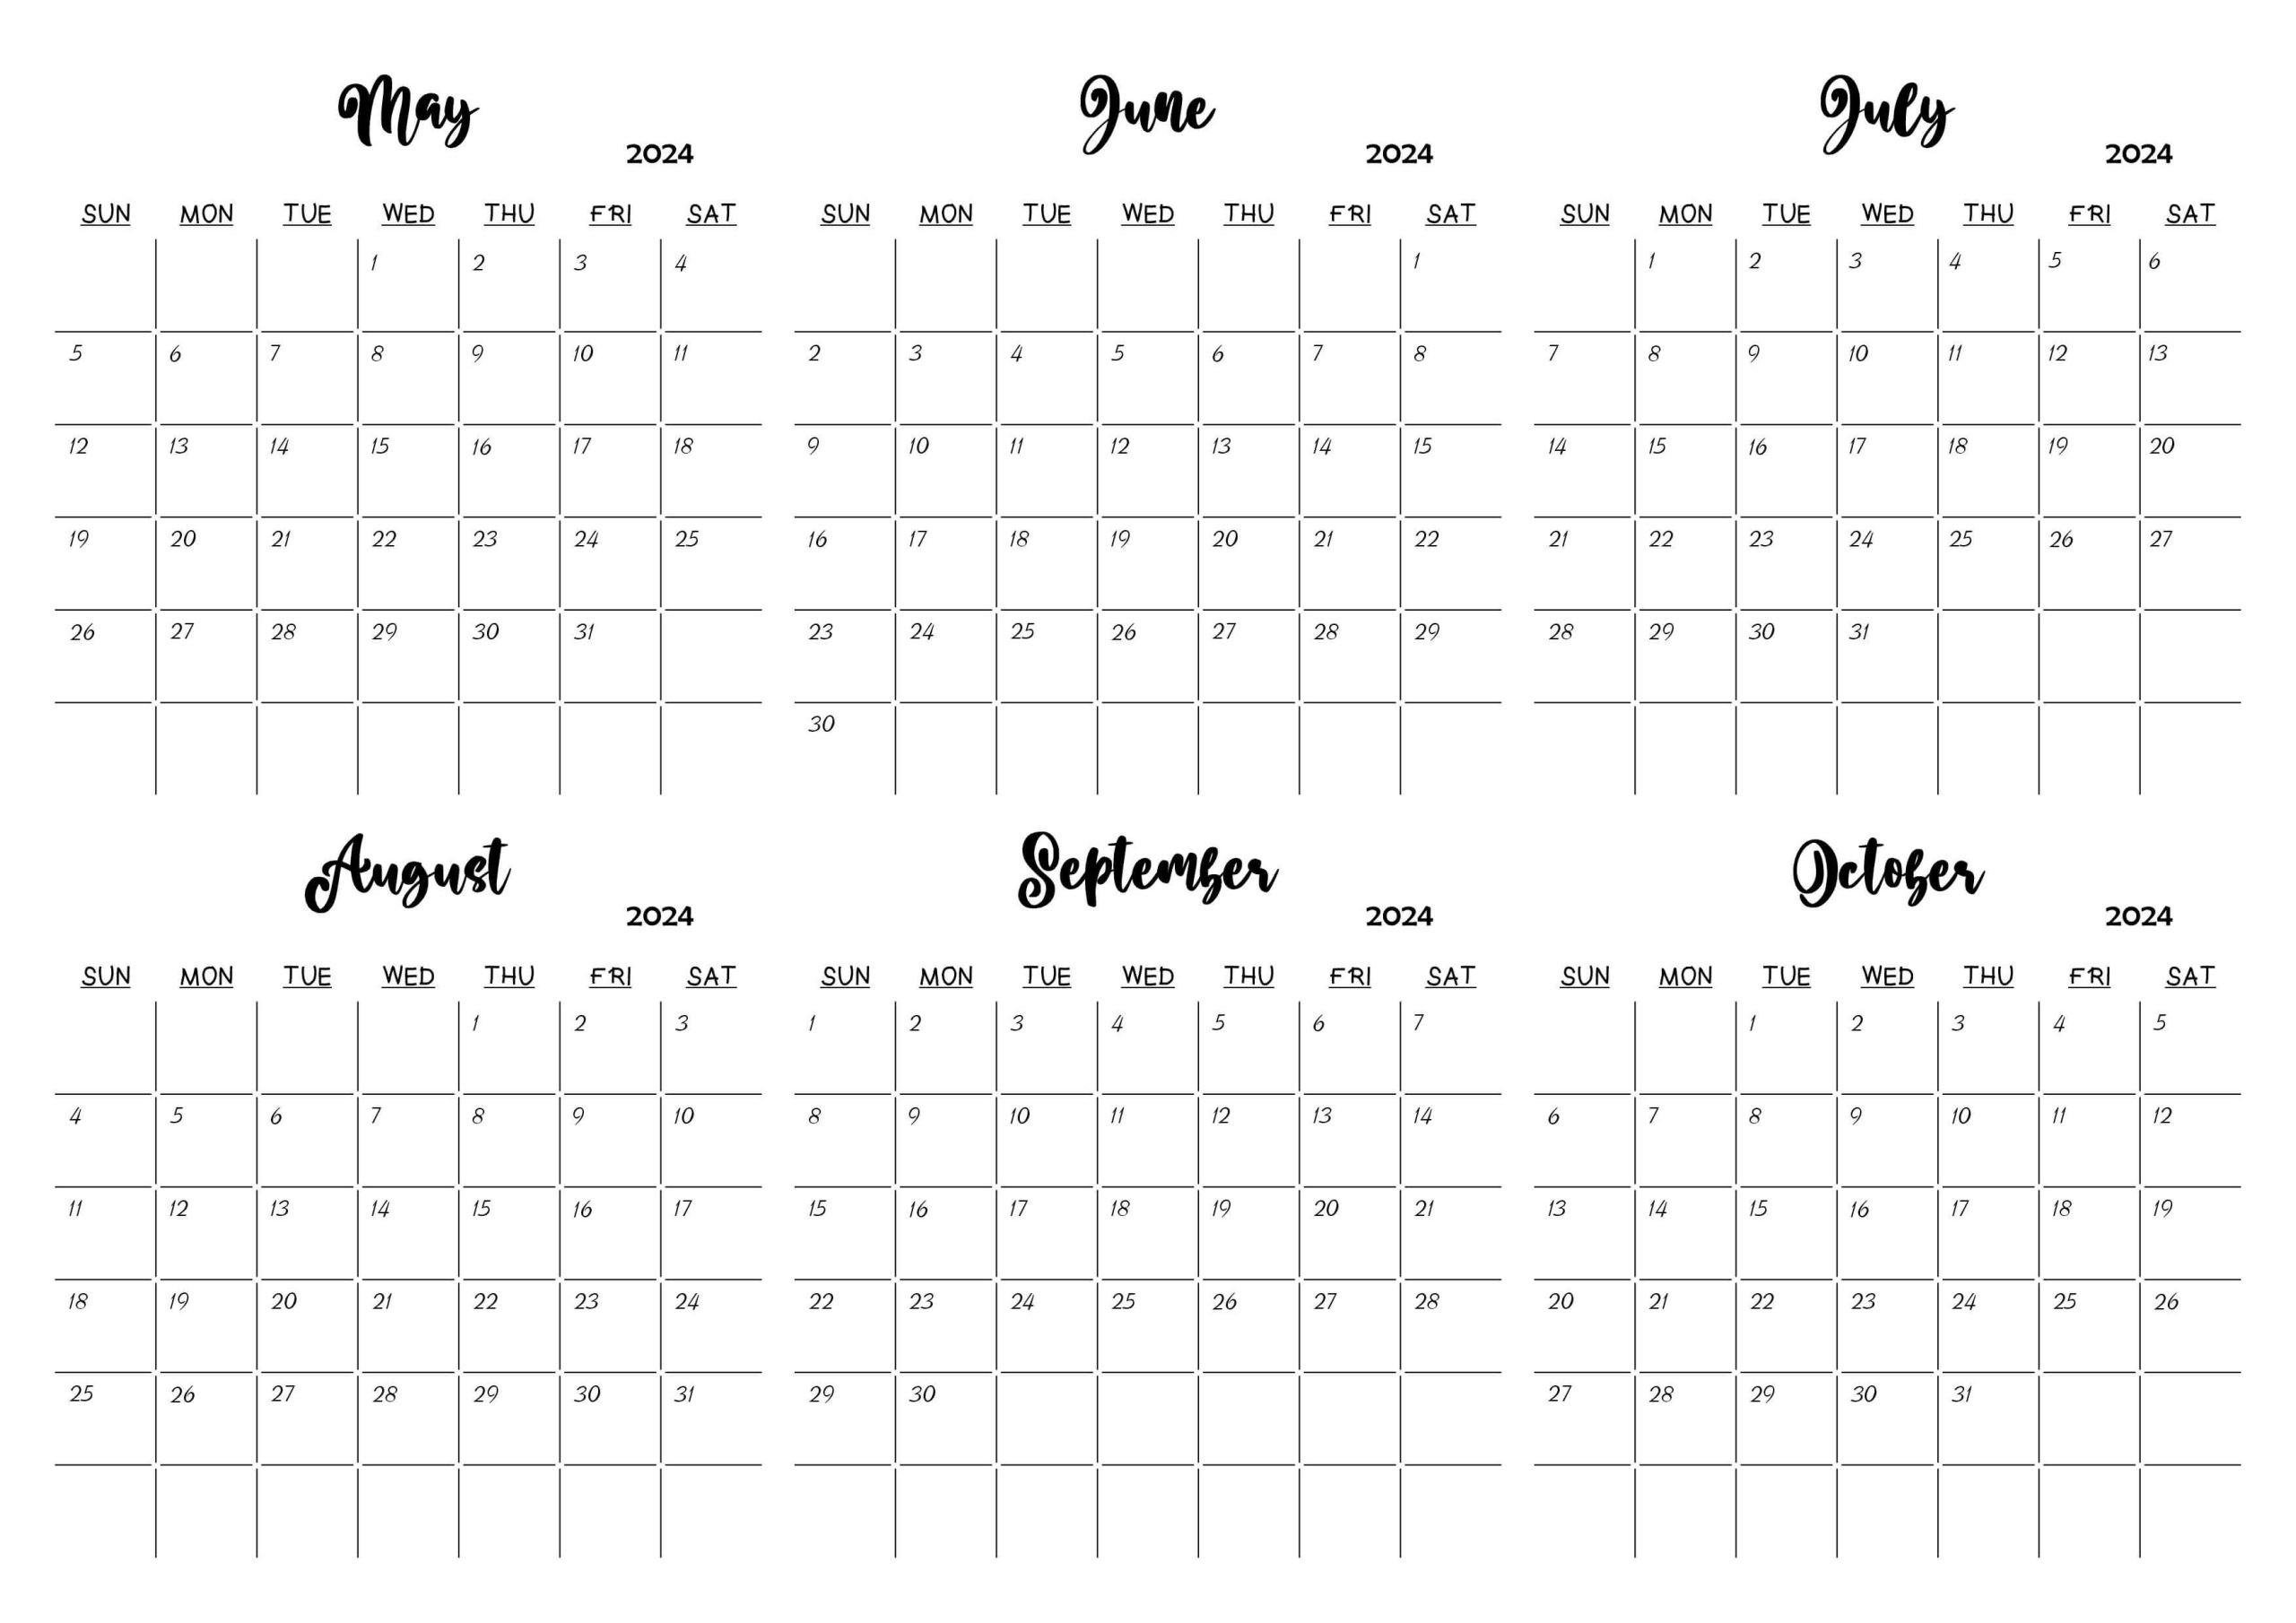 May to October 2024 Calendar